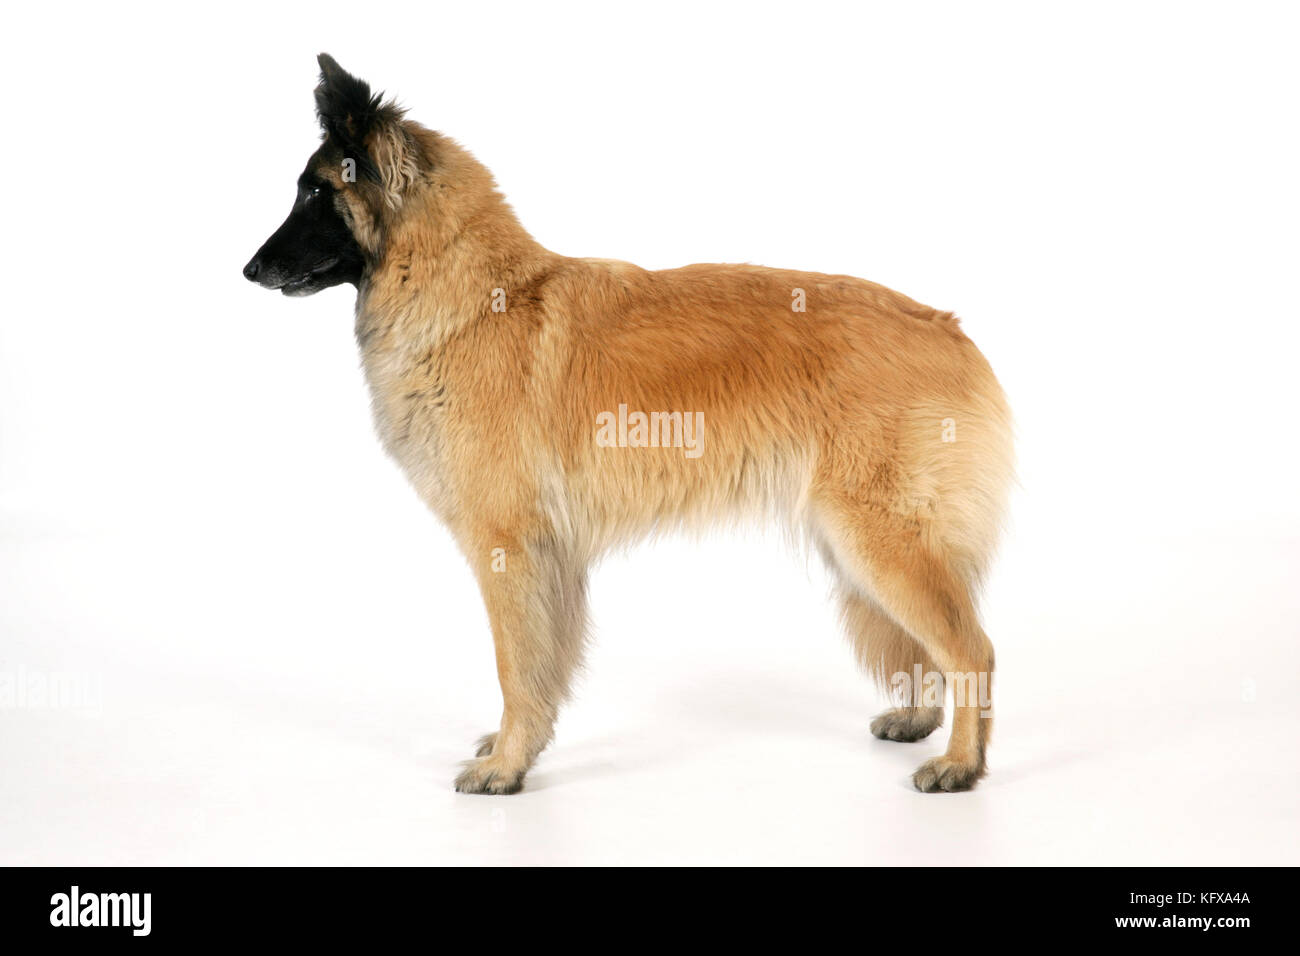 DOG Posture. alert, looking at something interesting Stock Photo